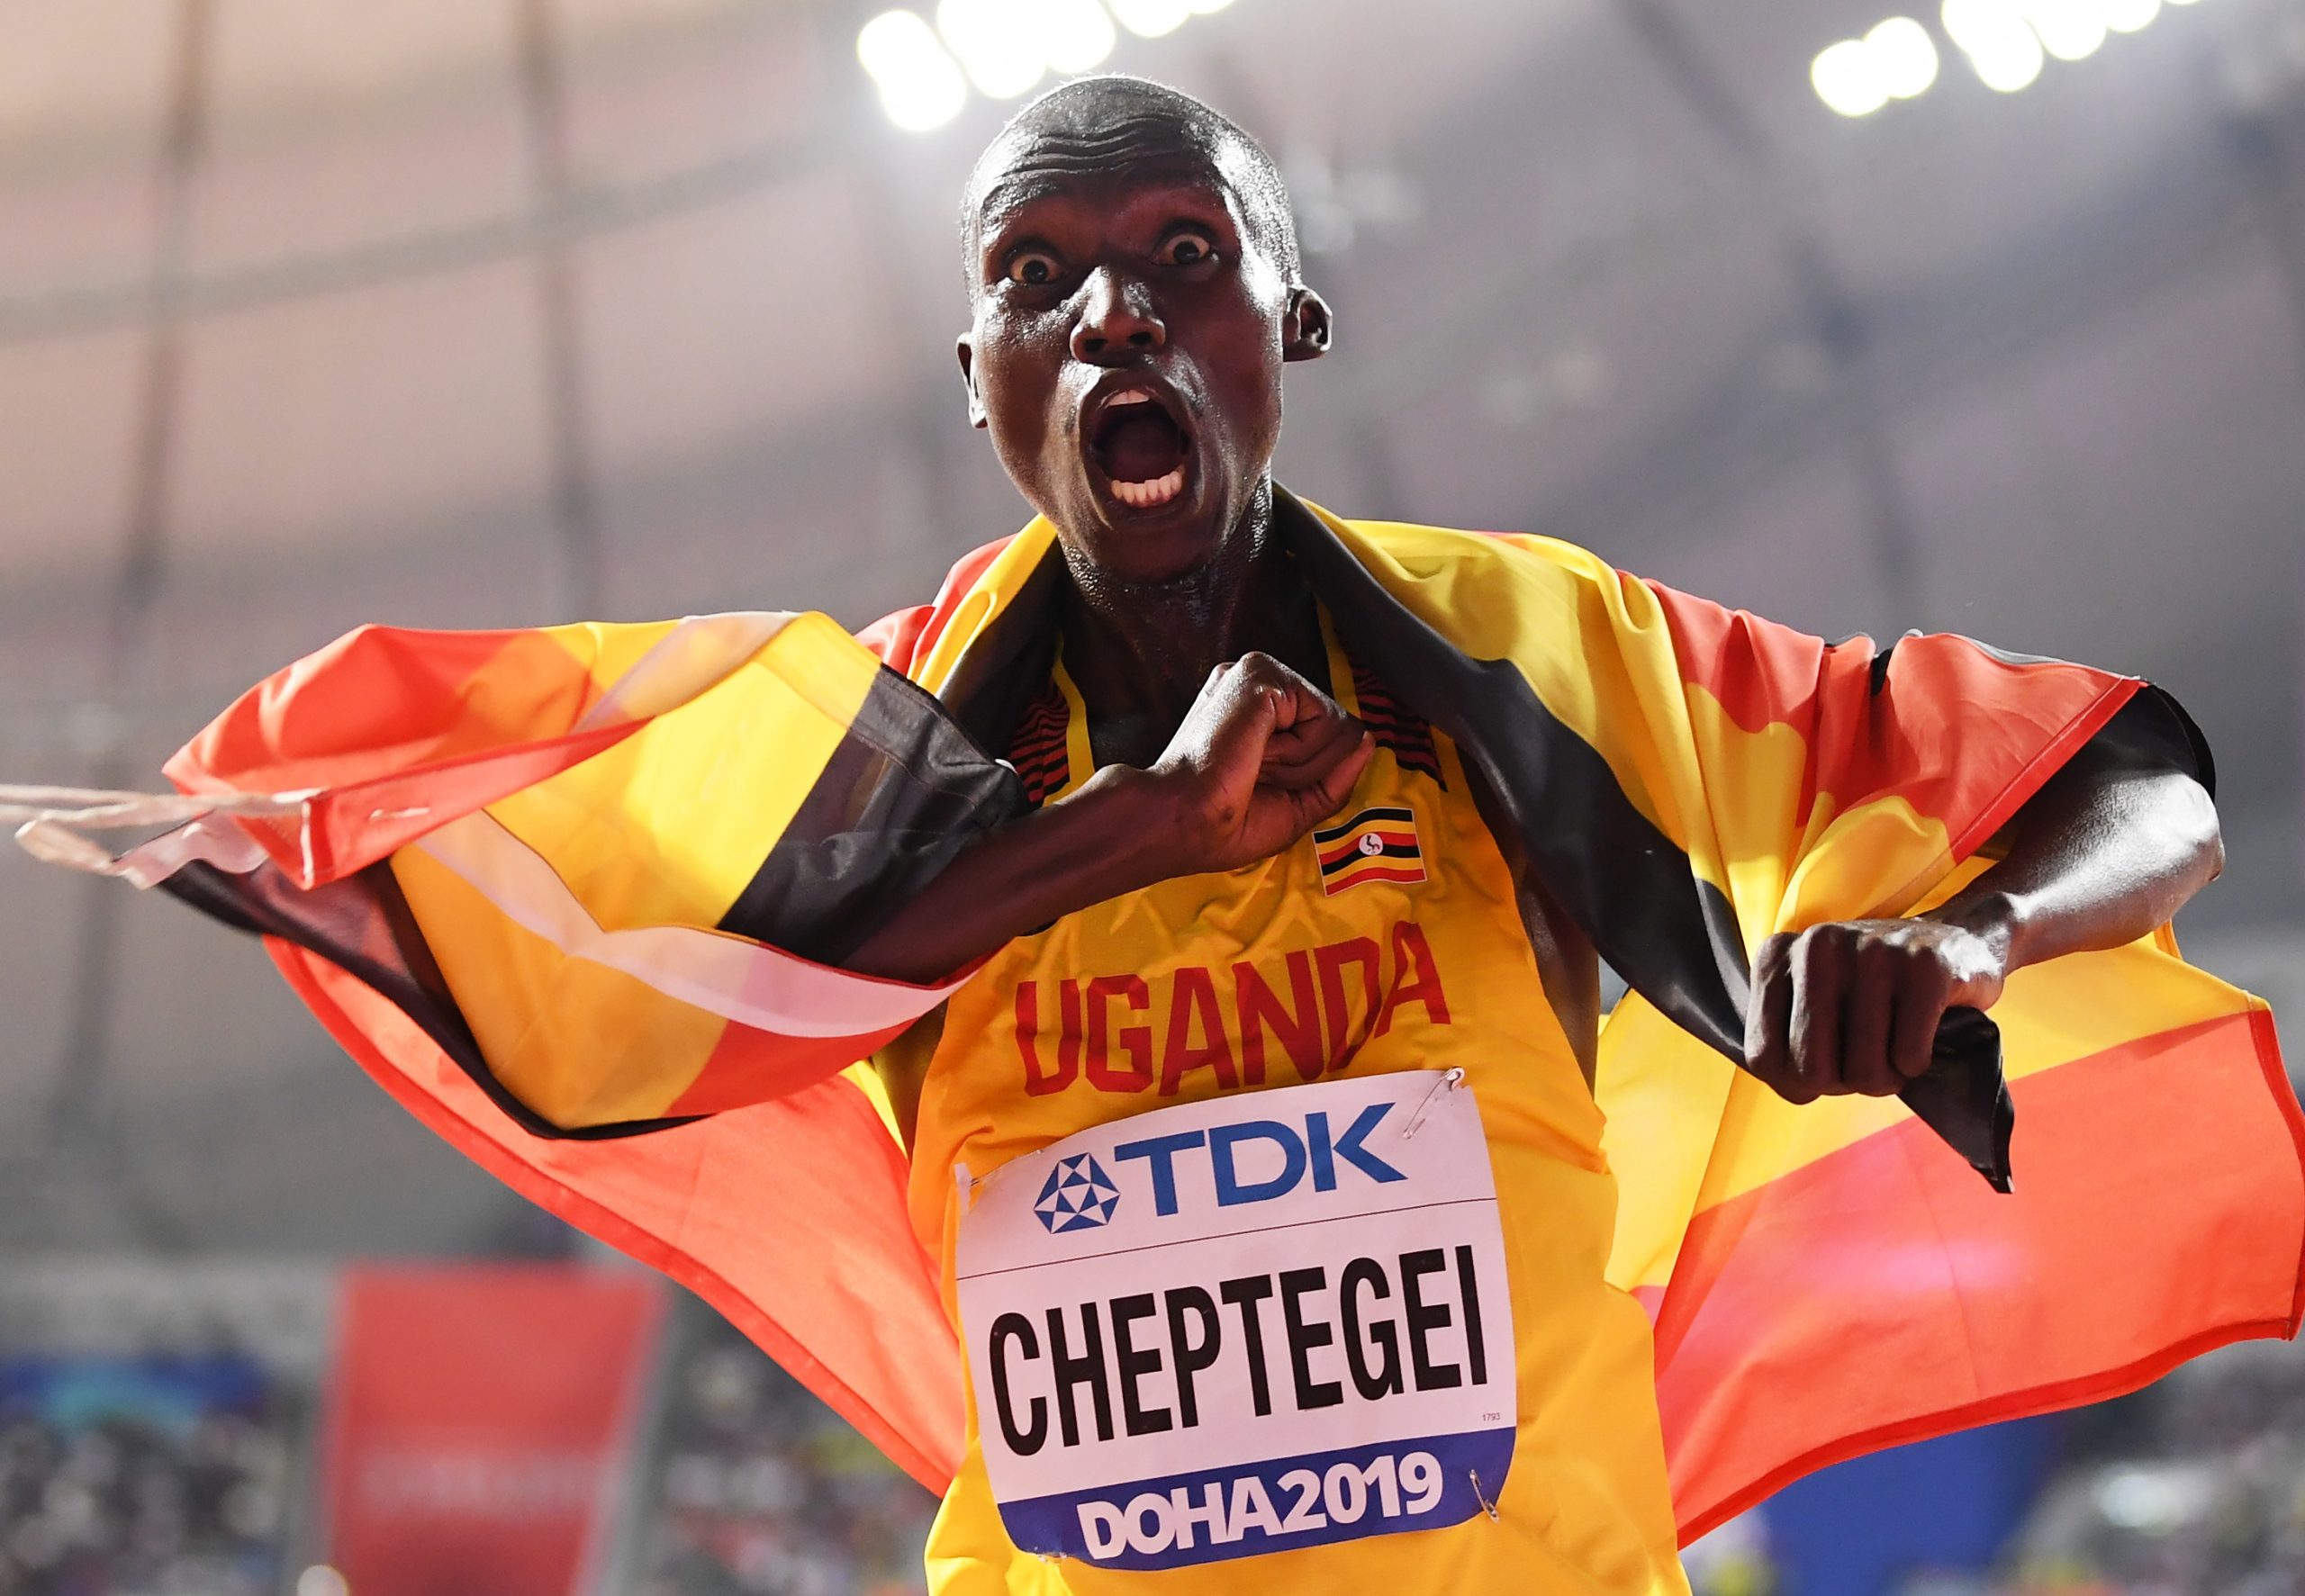 Flex D’Paper dedicates “Cheptegei” to Joshua Cheptegei and Ugandan sports community on debut album Kampala Boy